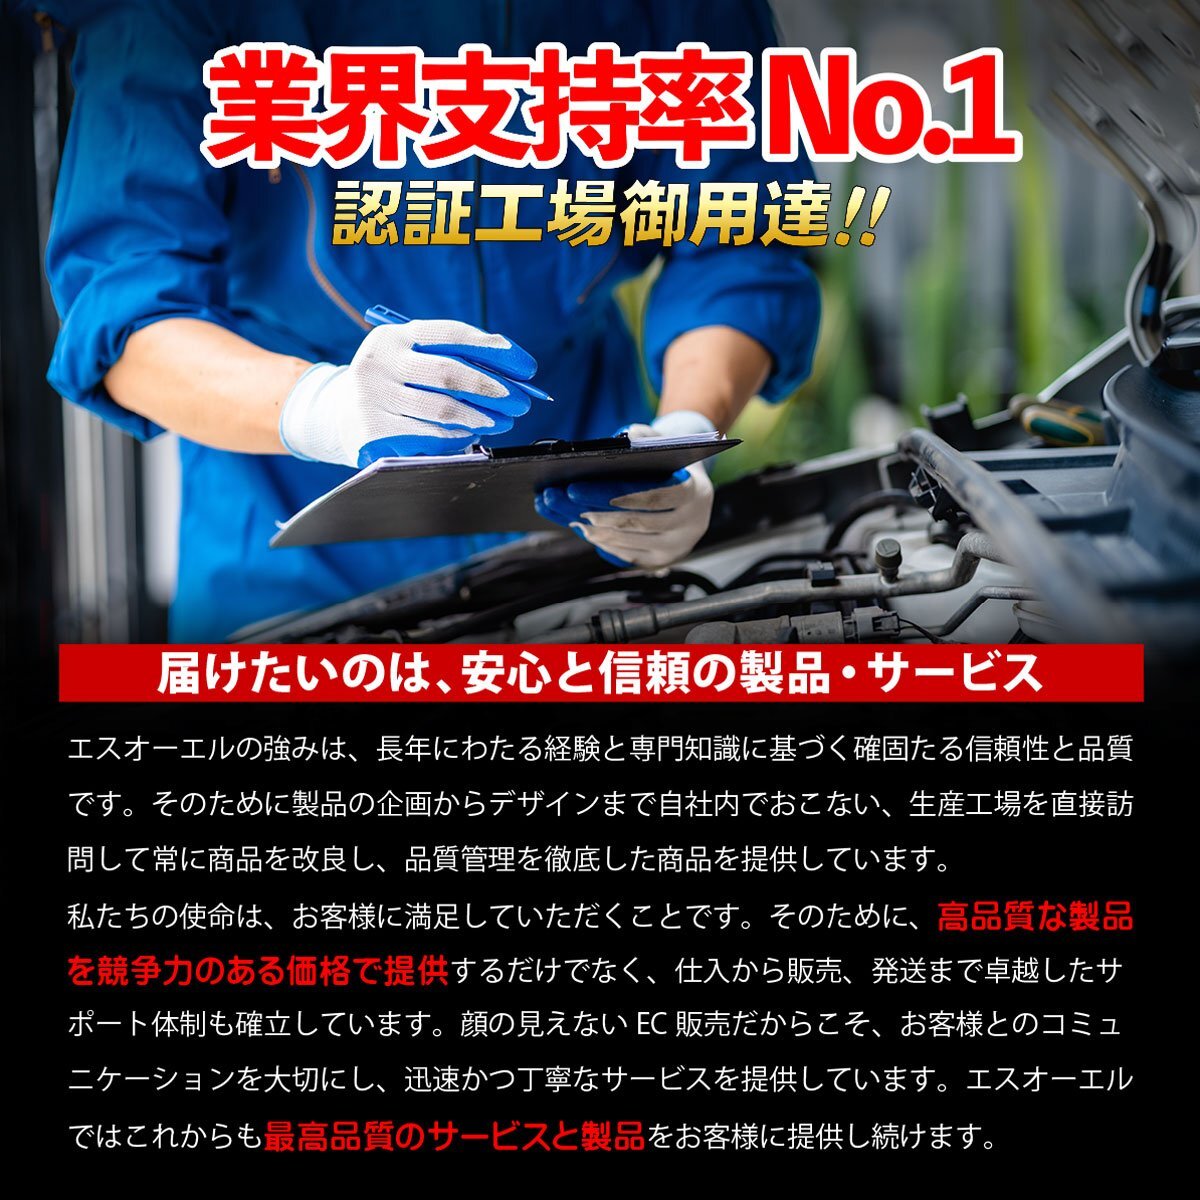  Mitsubishi MITSUBISHI Мицубиси Town Box Wide U65W U66W кондиционер компрессор отгрузка конечный срок 18 час марка машины особый дизайн MR460148 core возврат не необходимо 